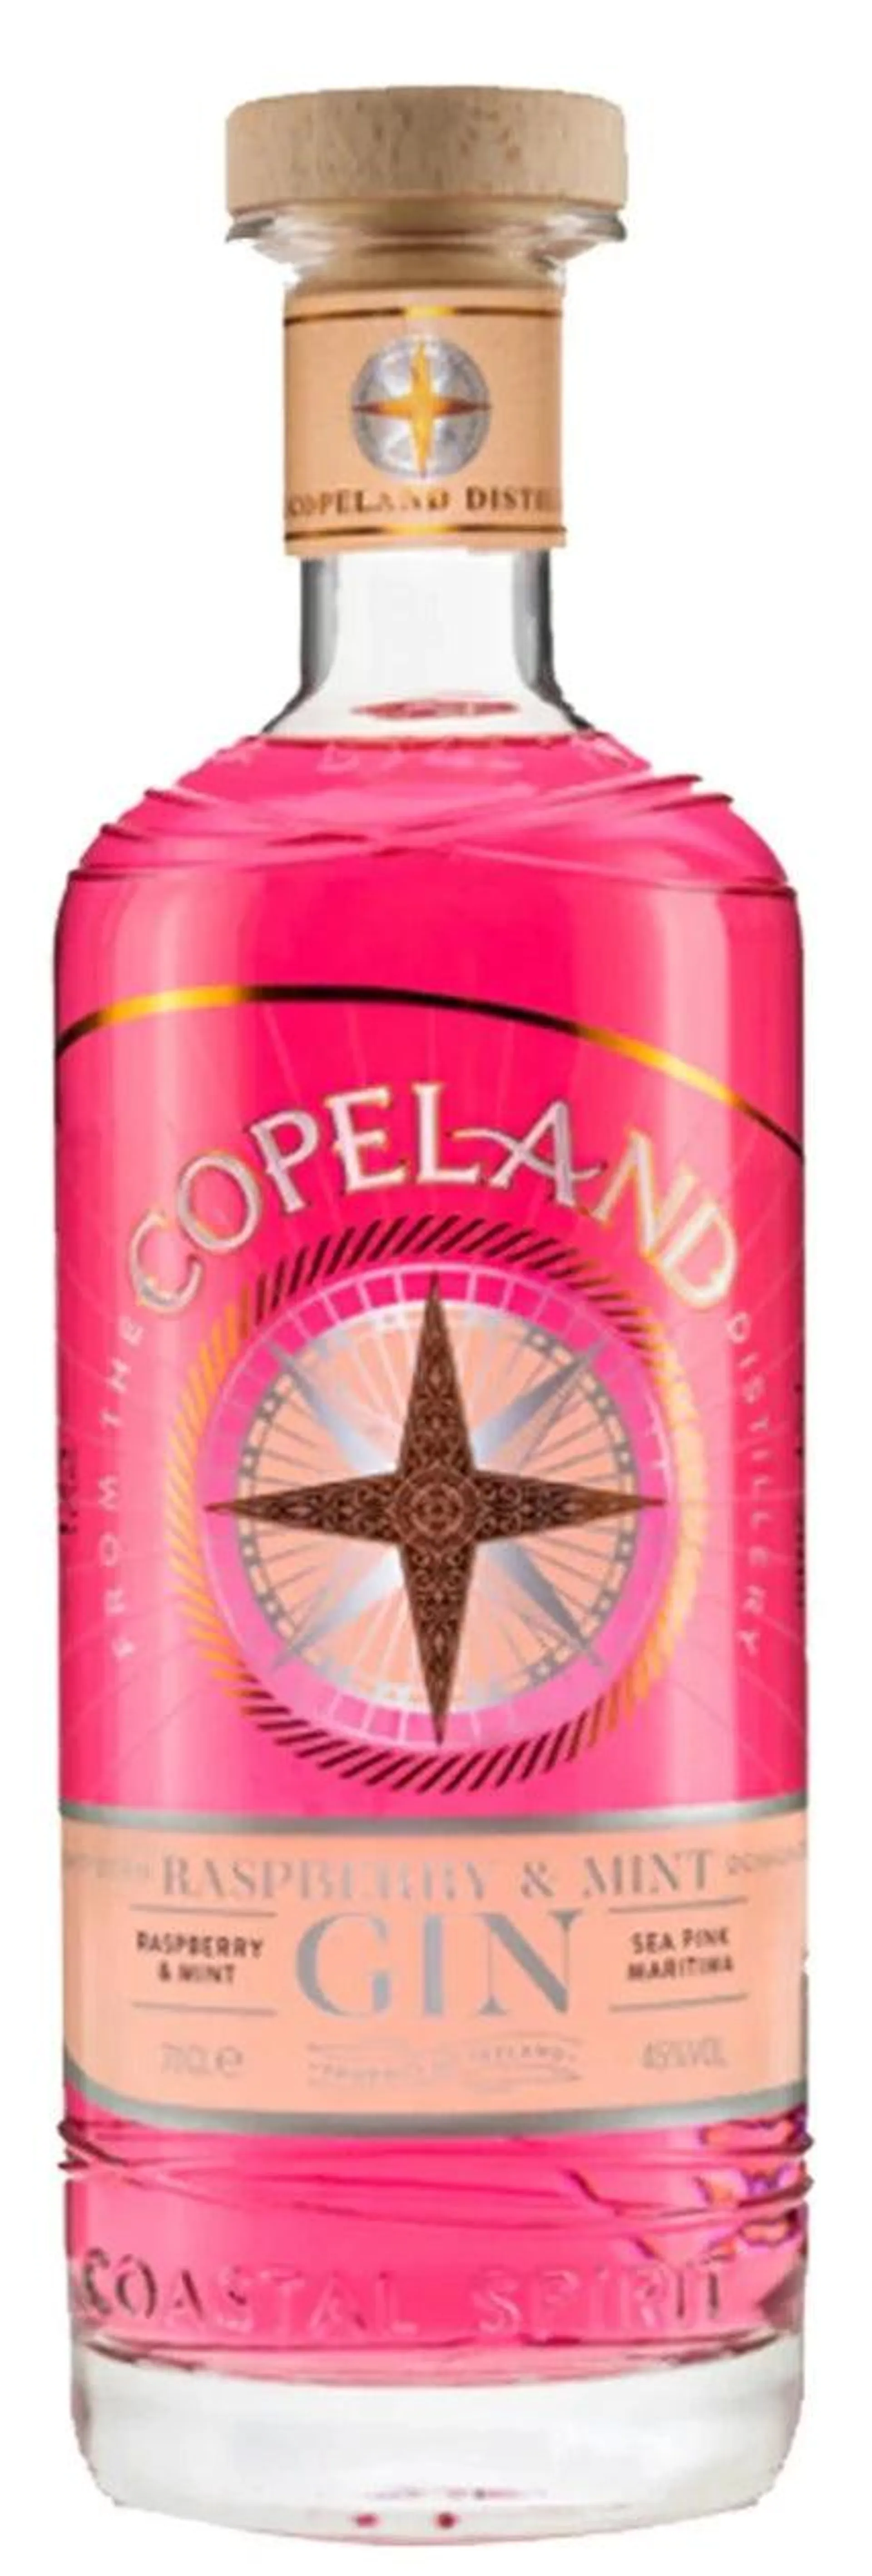 Copeland Raspberry & Mint Gin 70cl